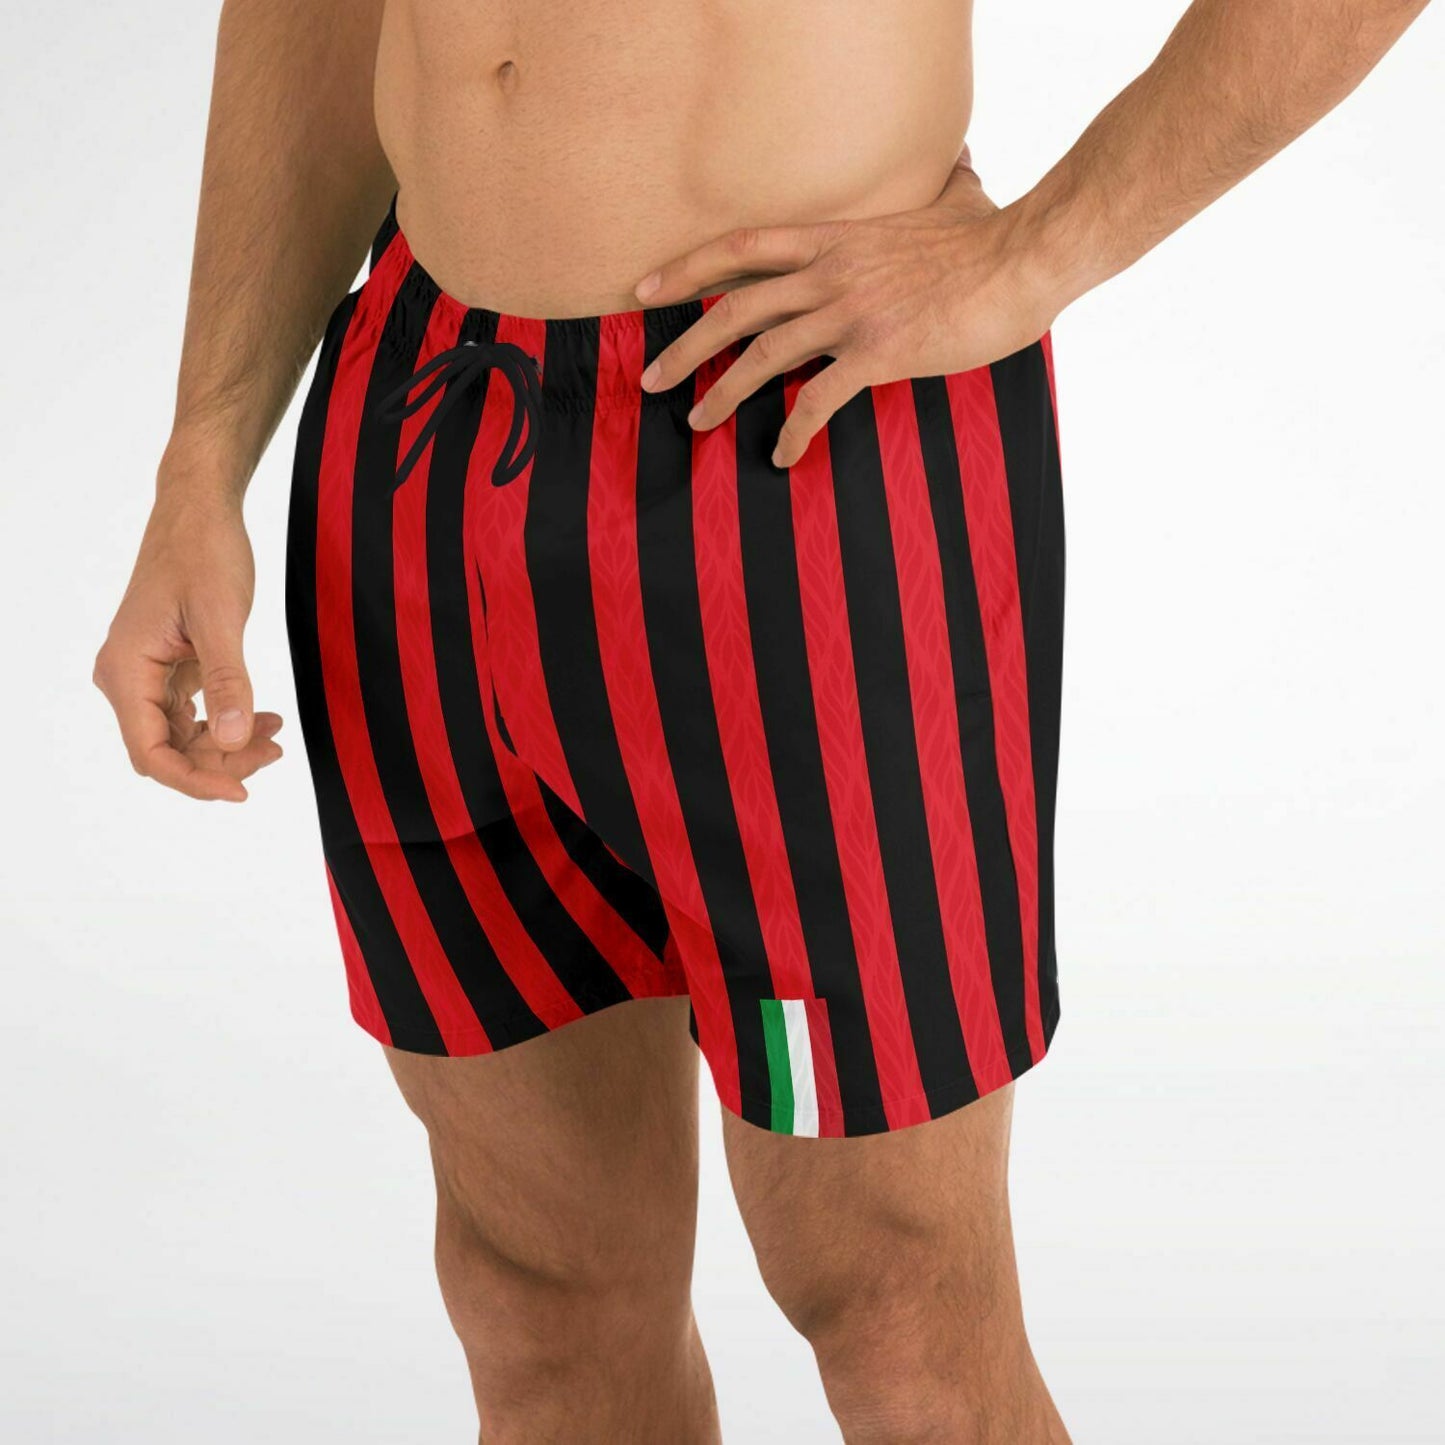 Milan Swim trunks